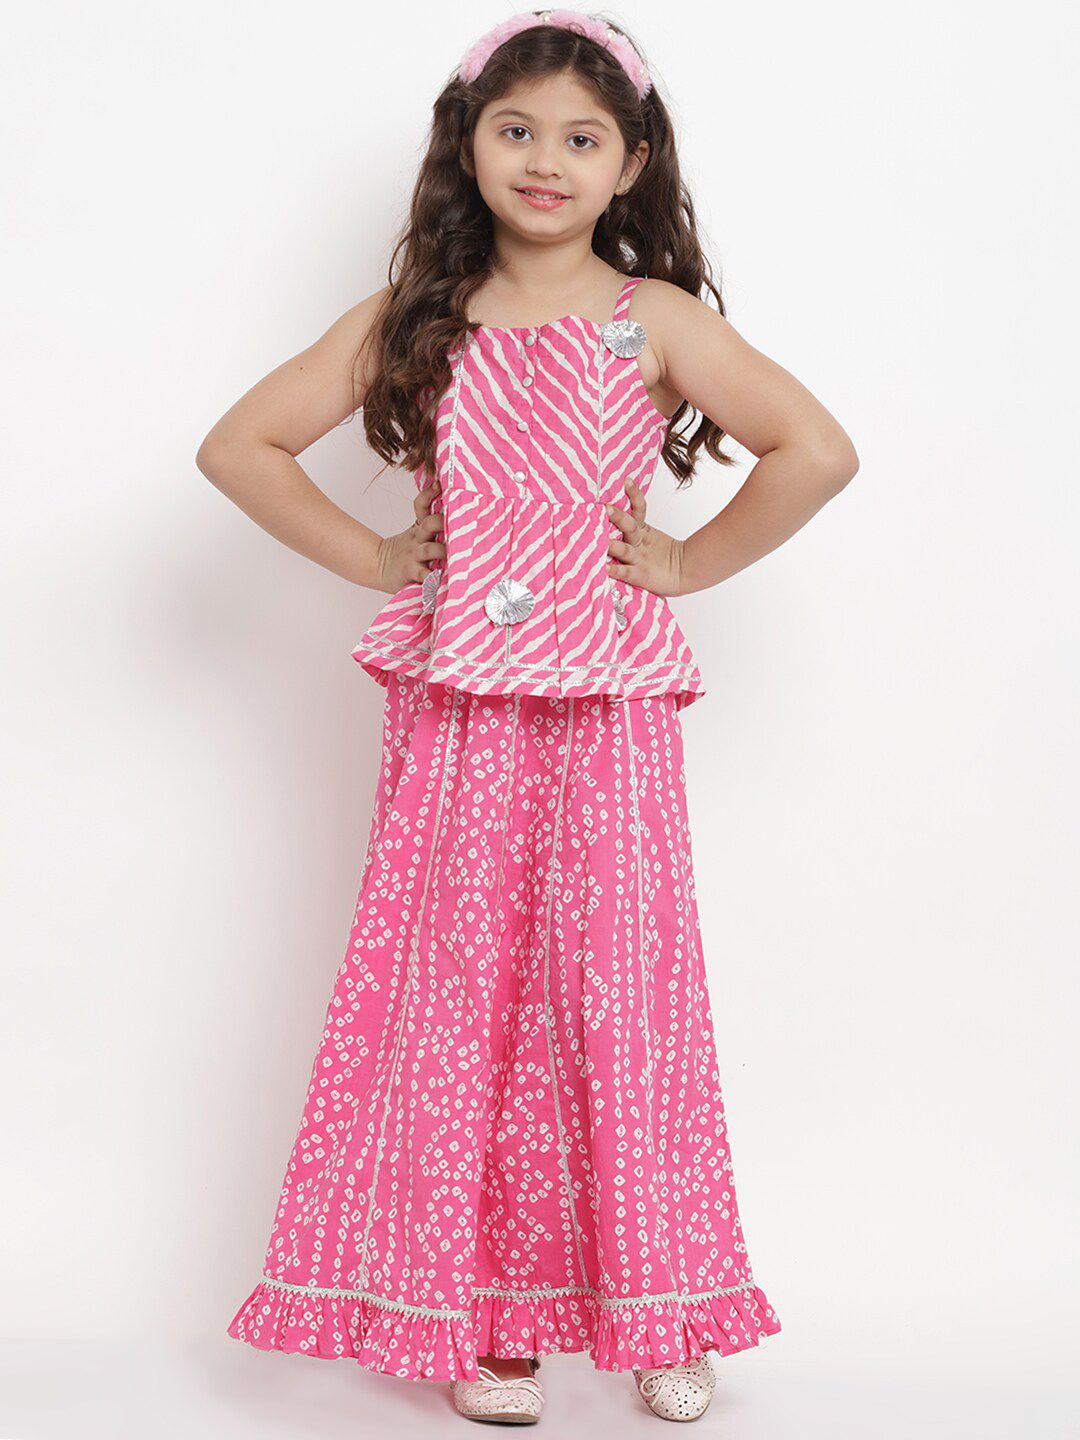 Bitiya by Bhama Pink Ready to Wear Printed Lehenga with Top Price in India